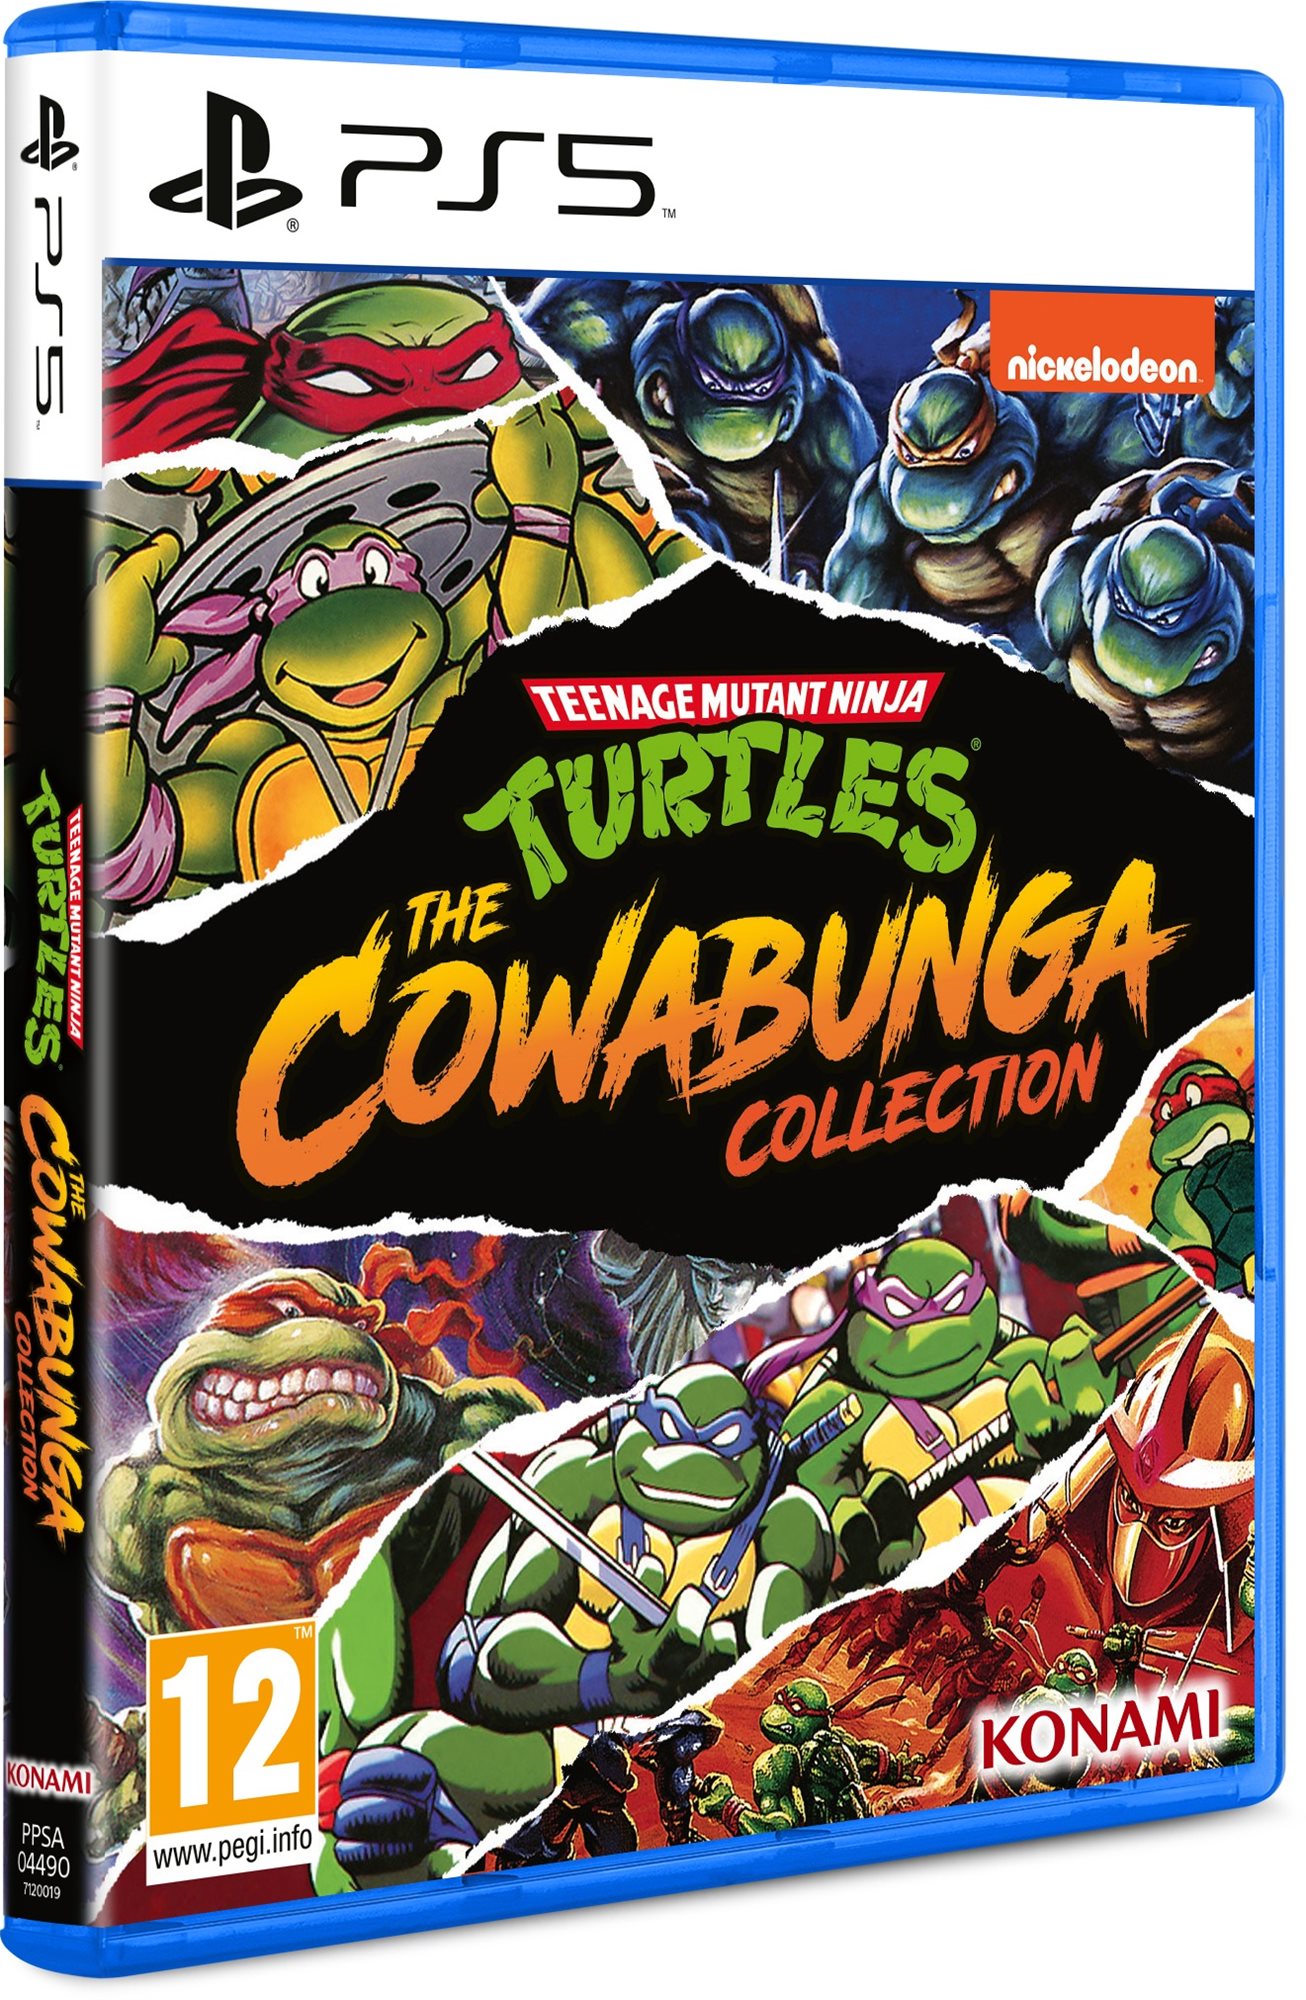 Teenage Mutant Ninja Turtles: The Cowabunga Collection - PS5